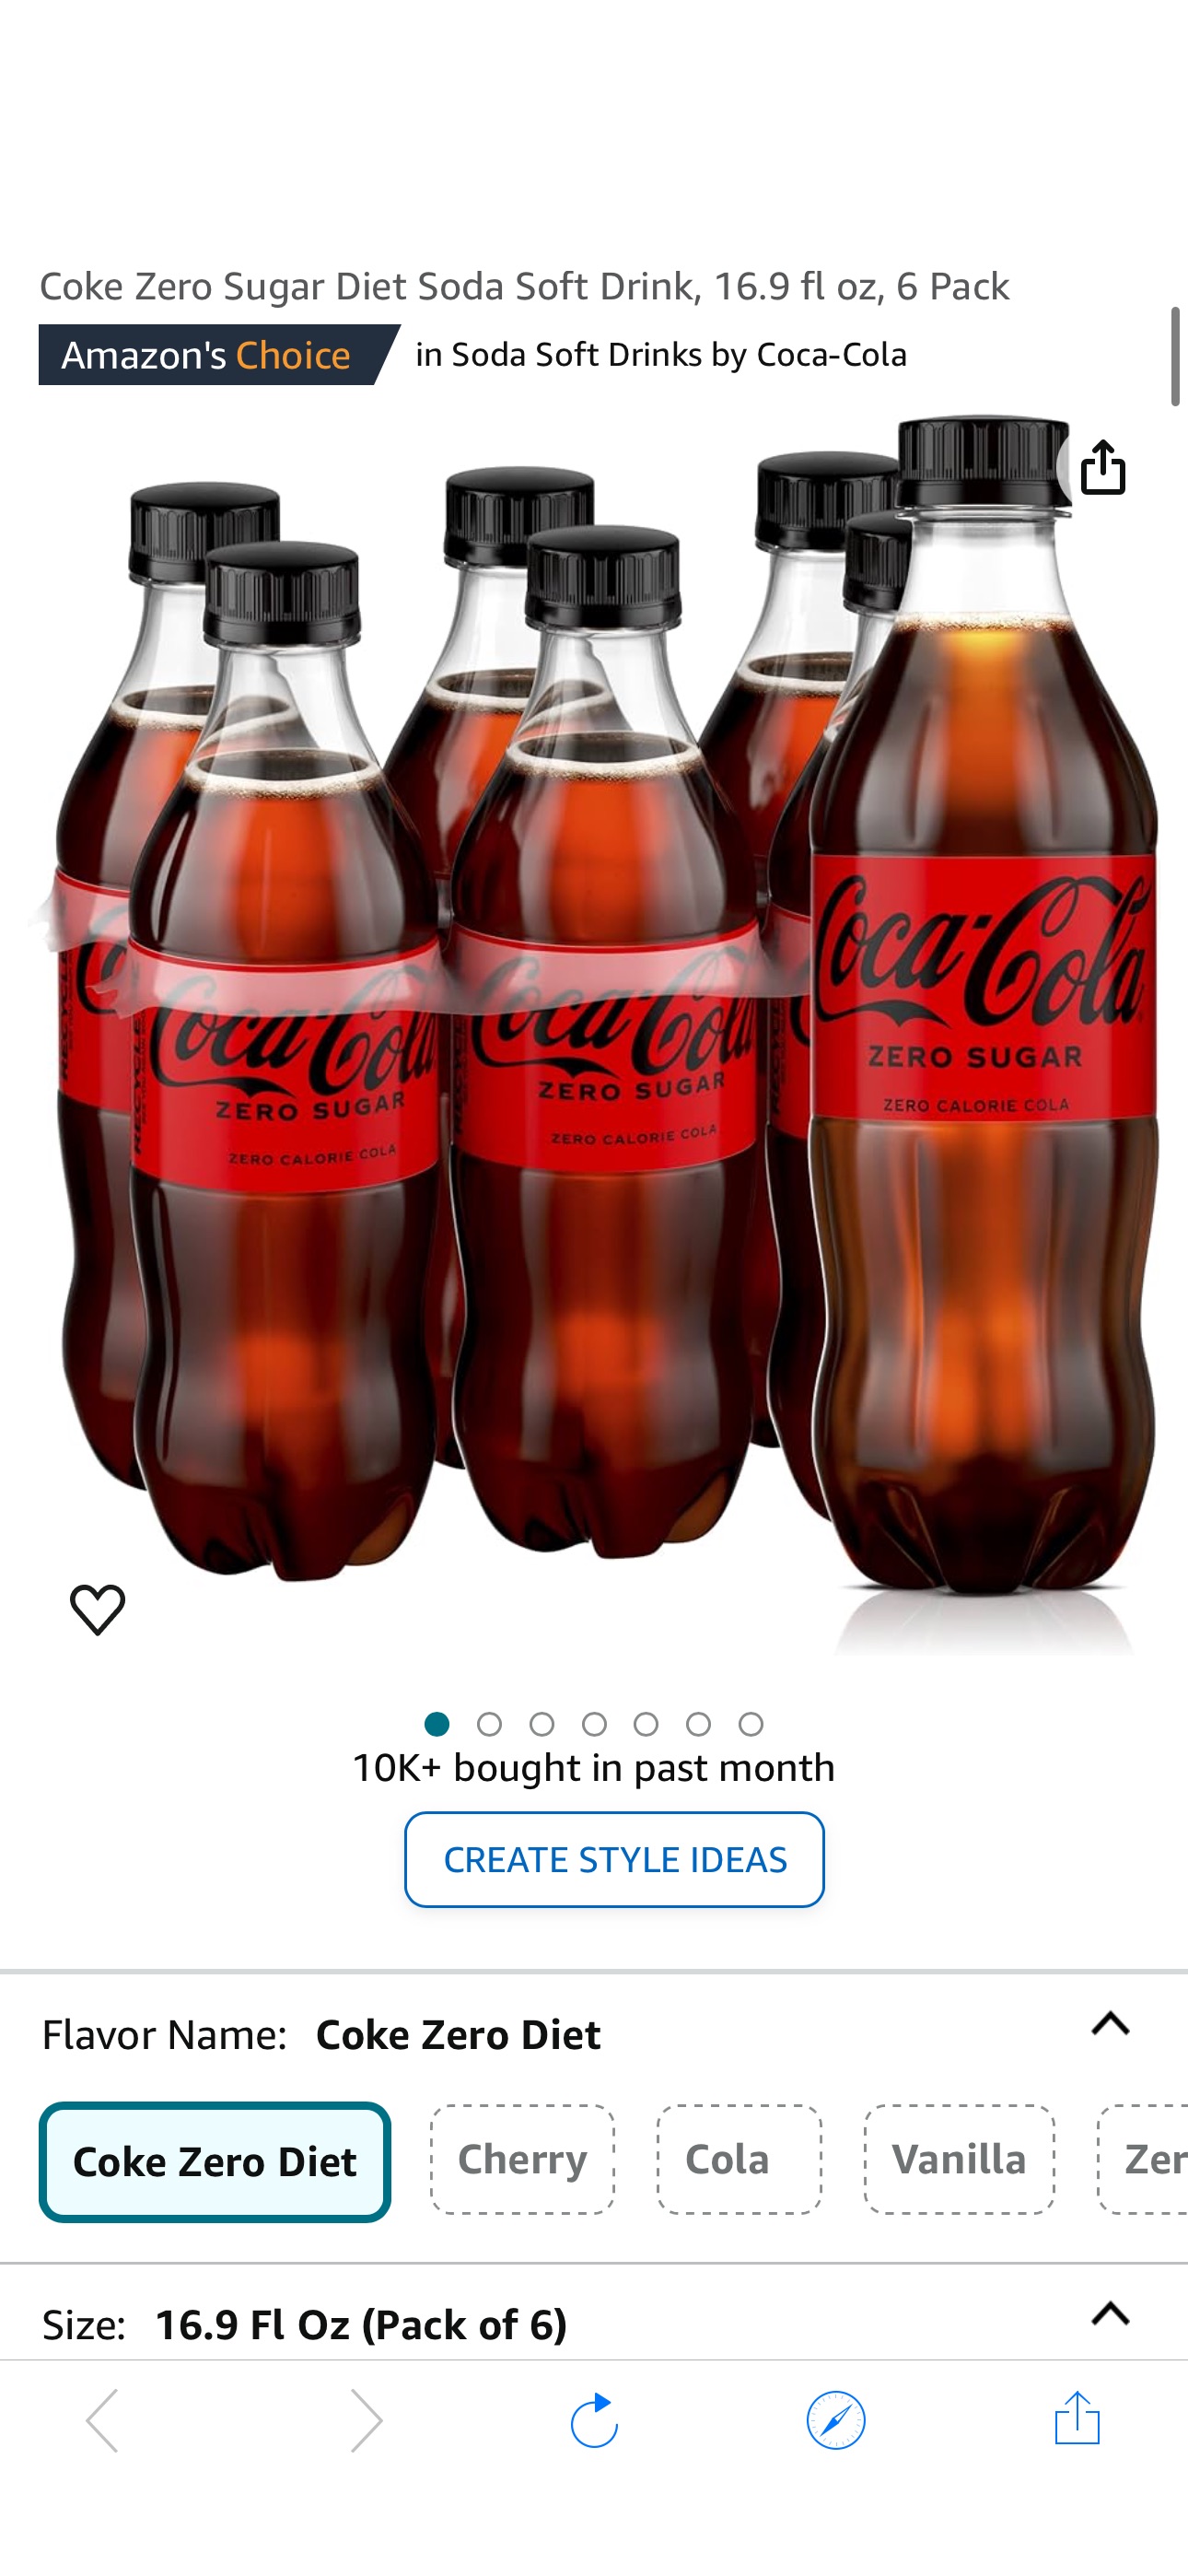 Amazon.com : Coke Zero Sugar Diet Soda Soft Drink, 16.9 fl oz, 6 Pack : Everything Else